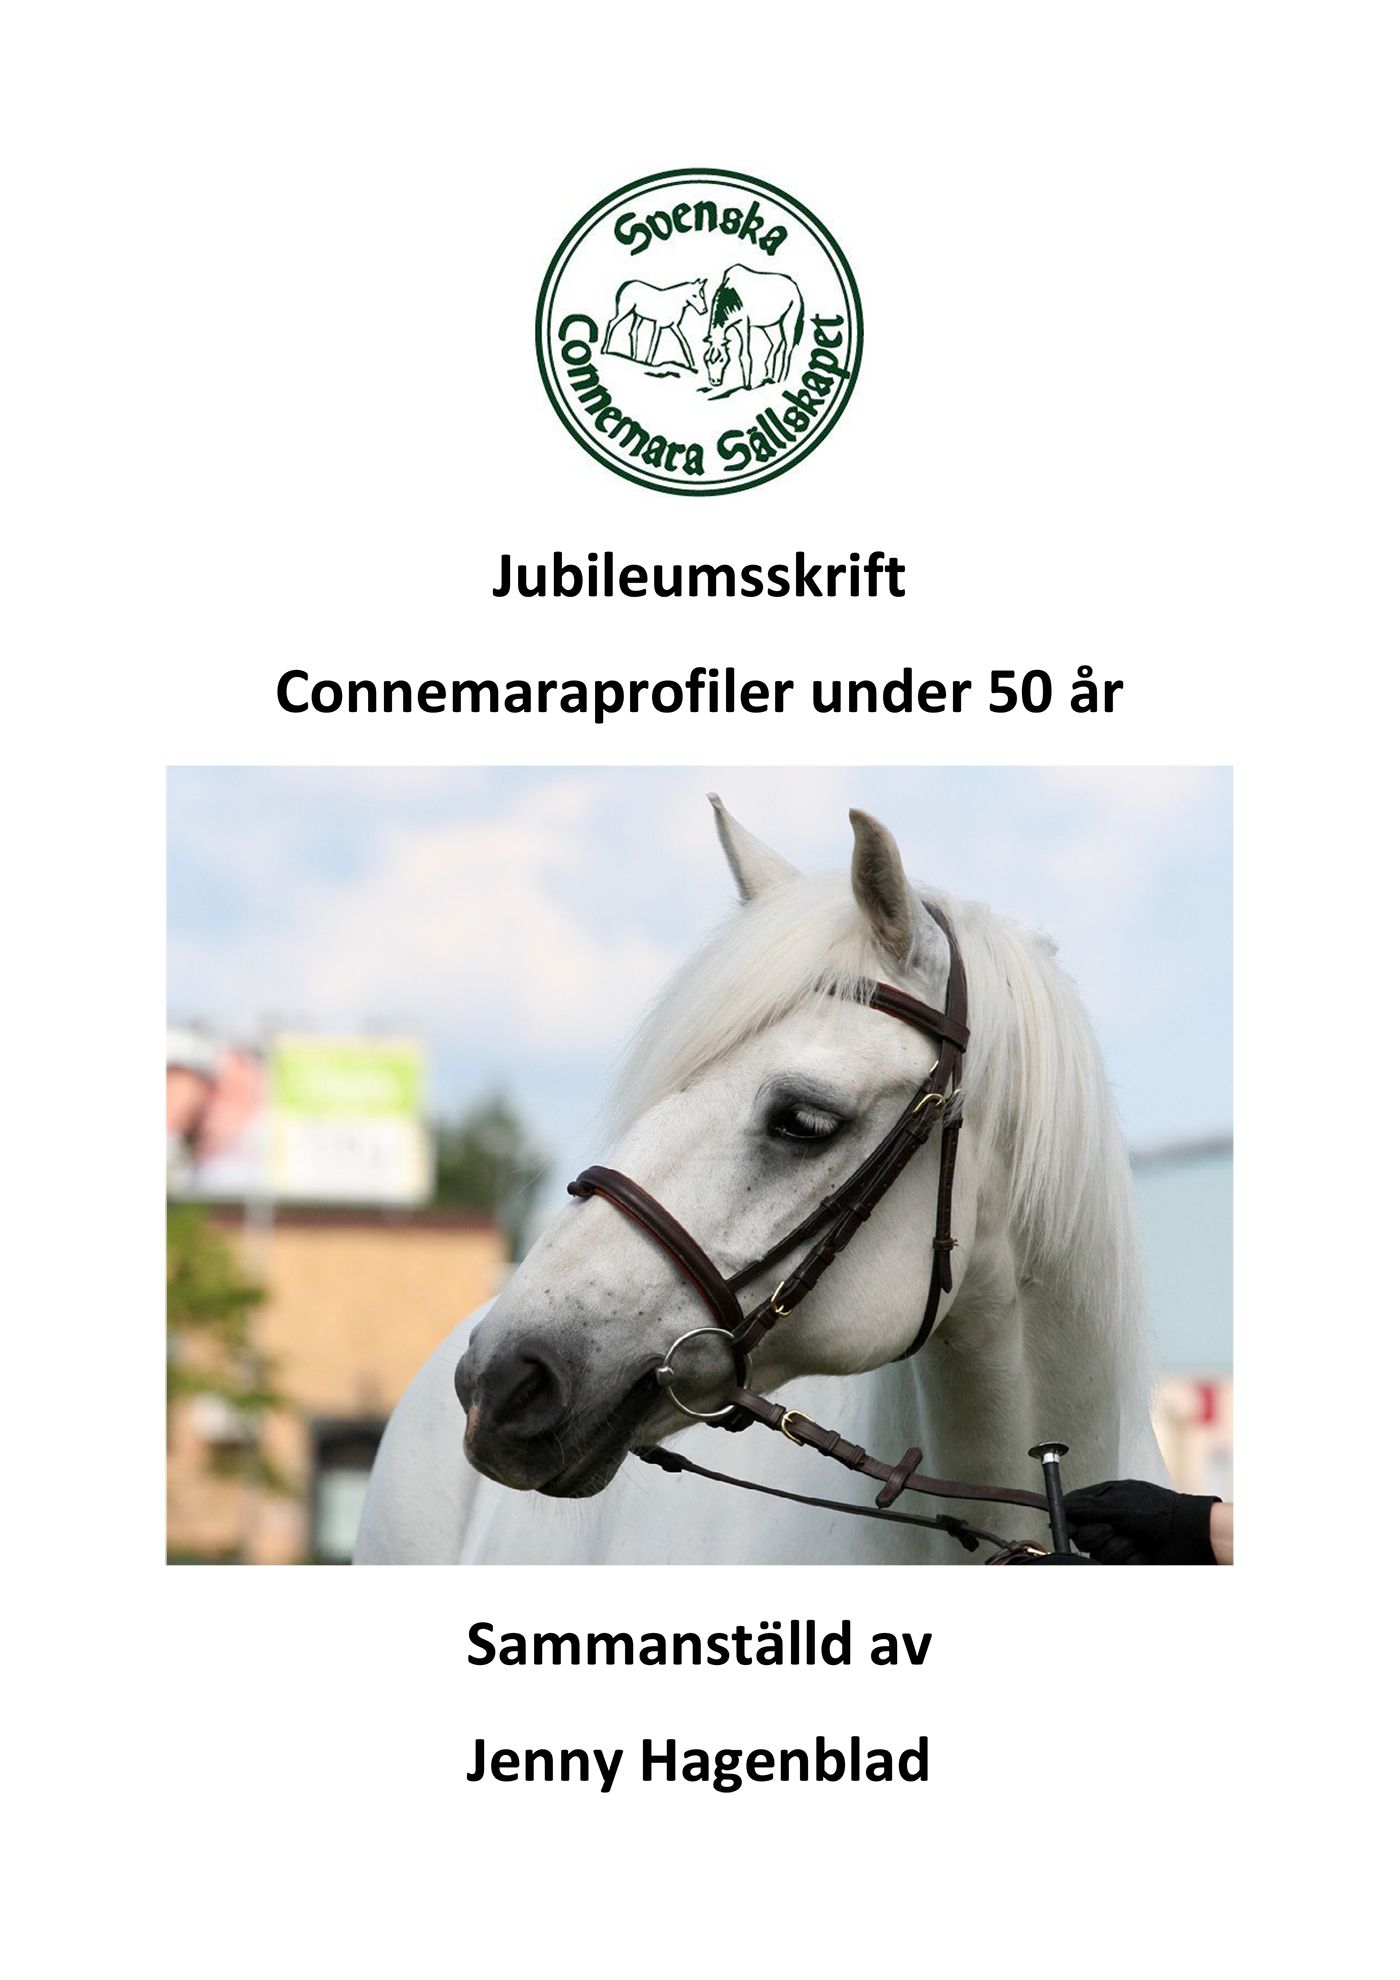 Jubileumsskrift - Connemaraprofiler under 50 år, e-bog af Svenska Connemarasällskapet